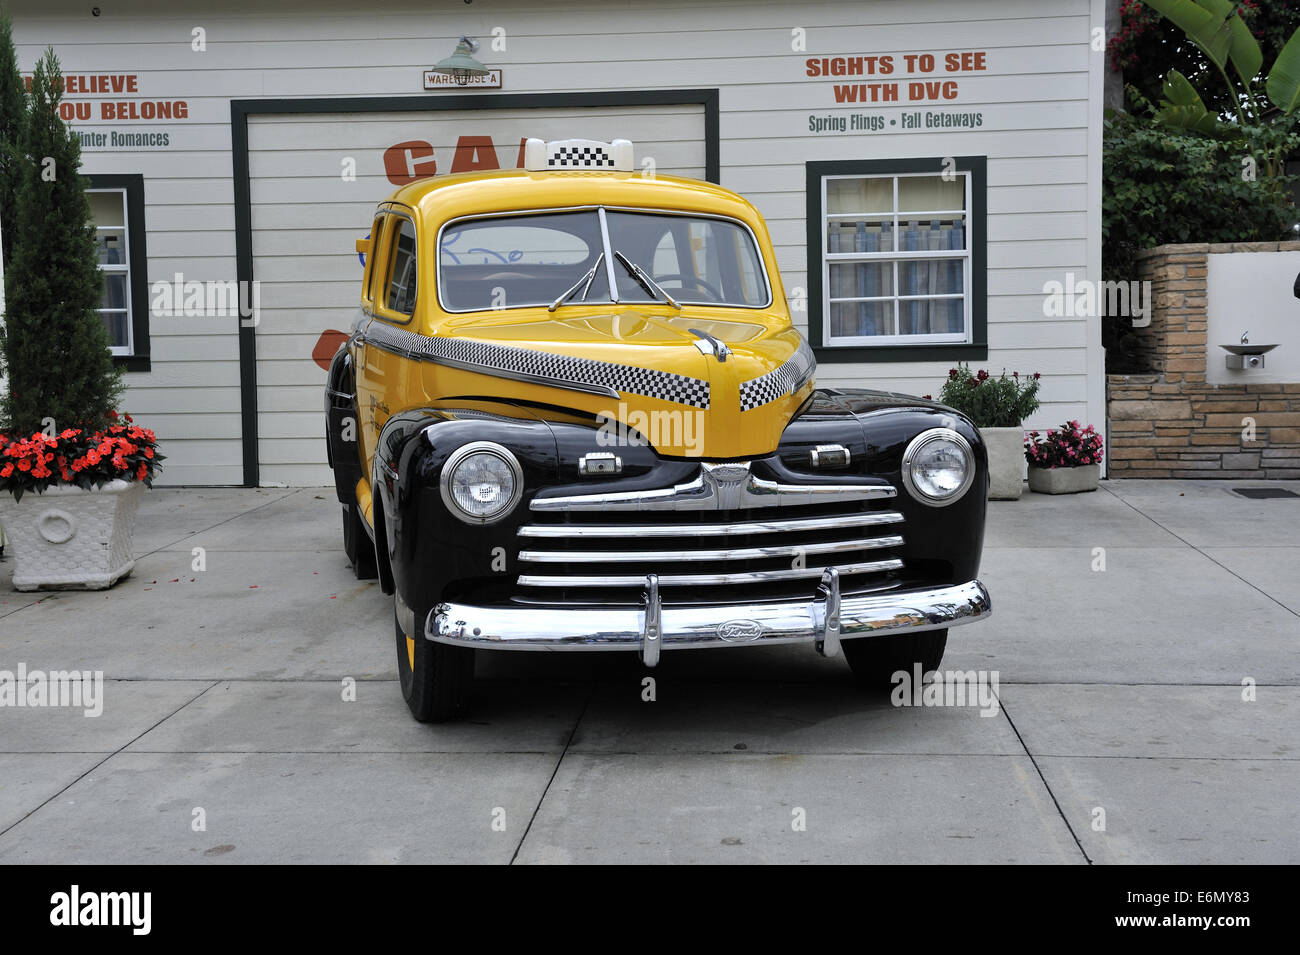 Vintage Ford Yellow cab taxi. Disney's Hollywood Studios, Orlando, Florida, USA Stock Photo